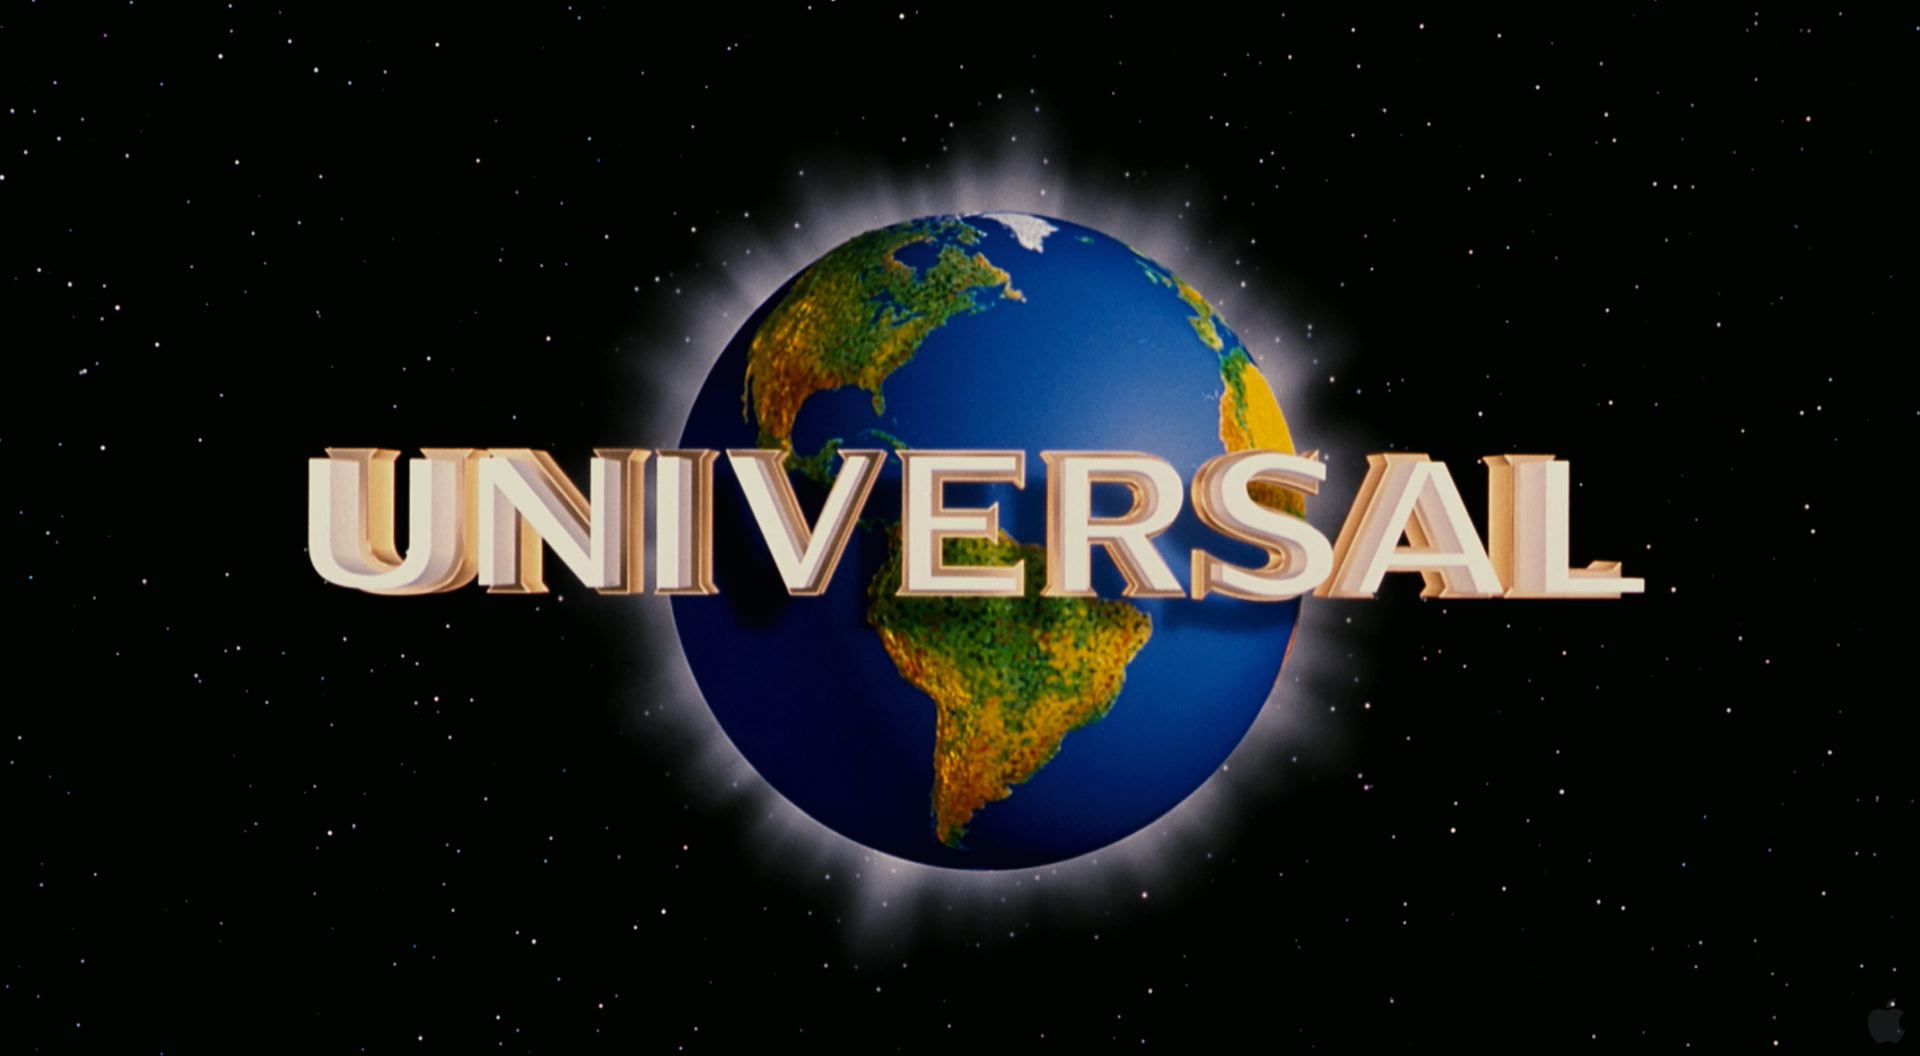 universal-studios-logo-wallpaper.jpg